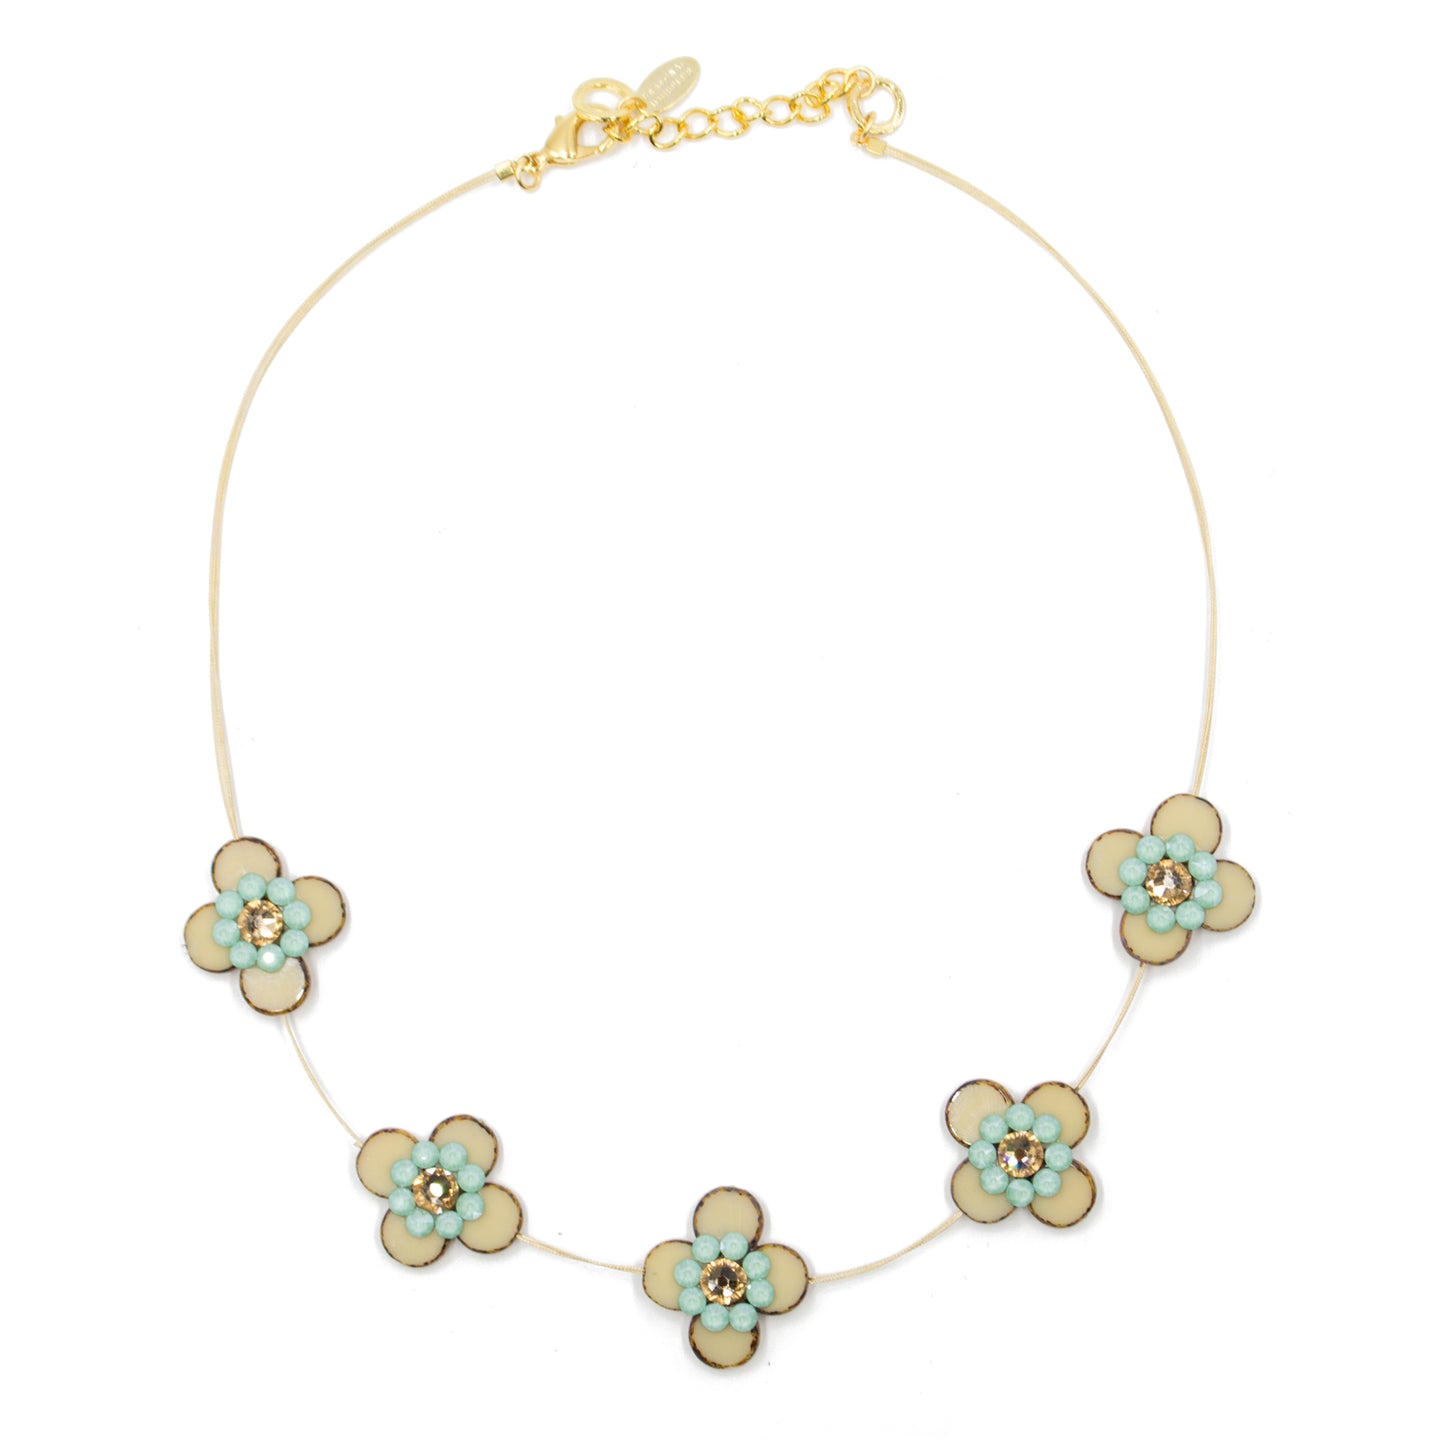 Romantic Floral Necklace 8484: Brown/ Gold